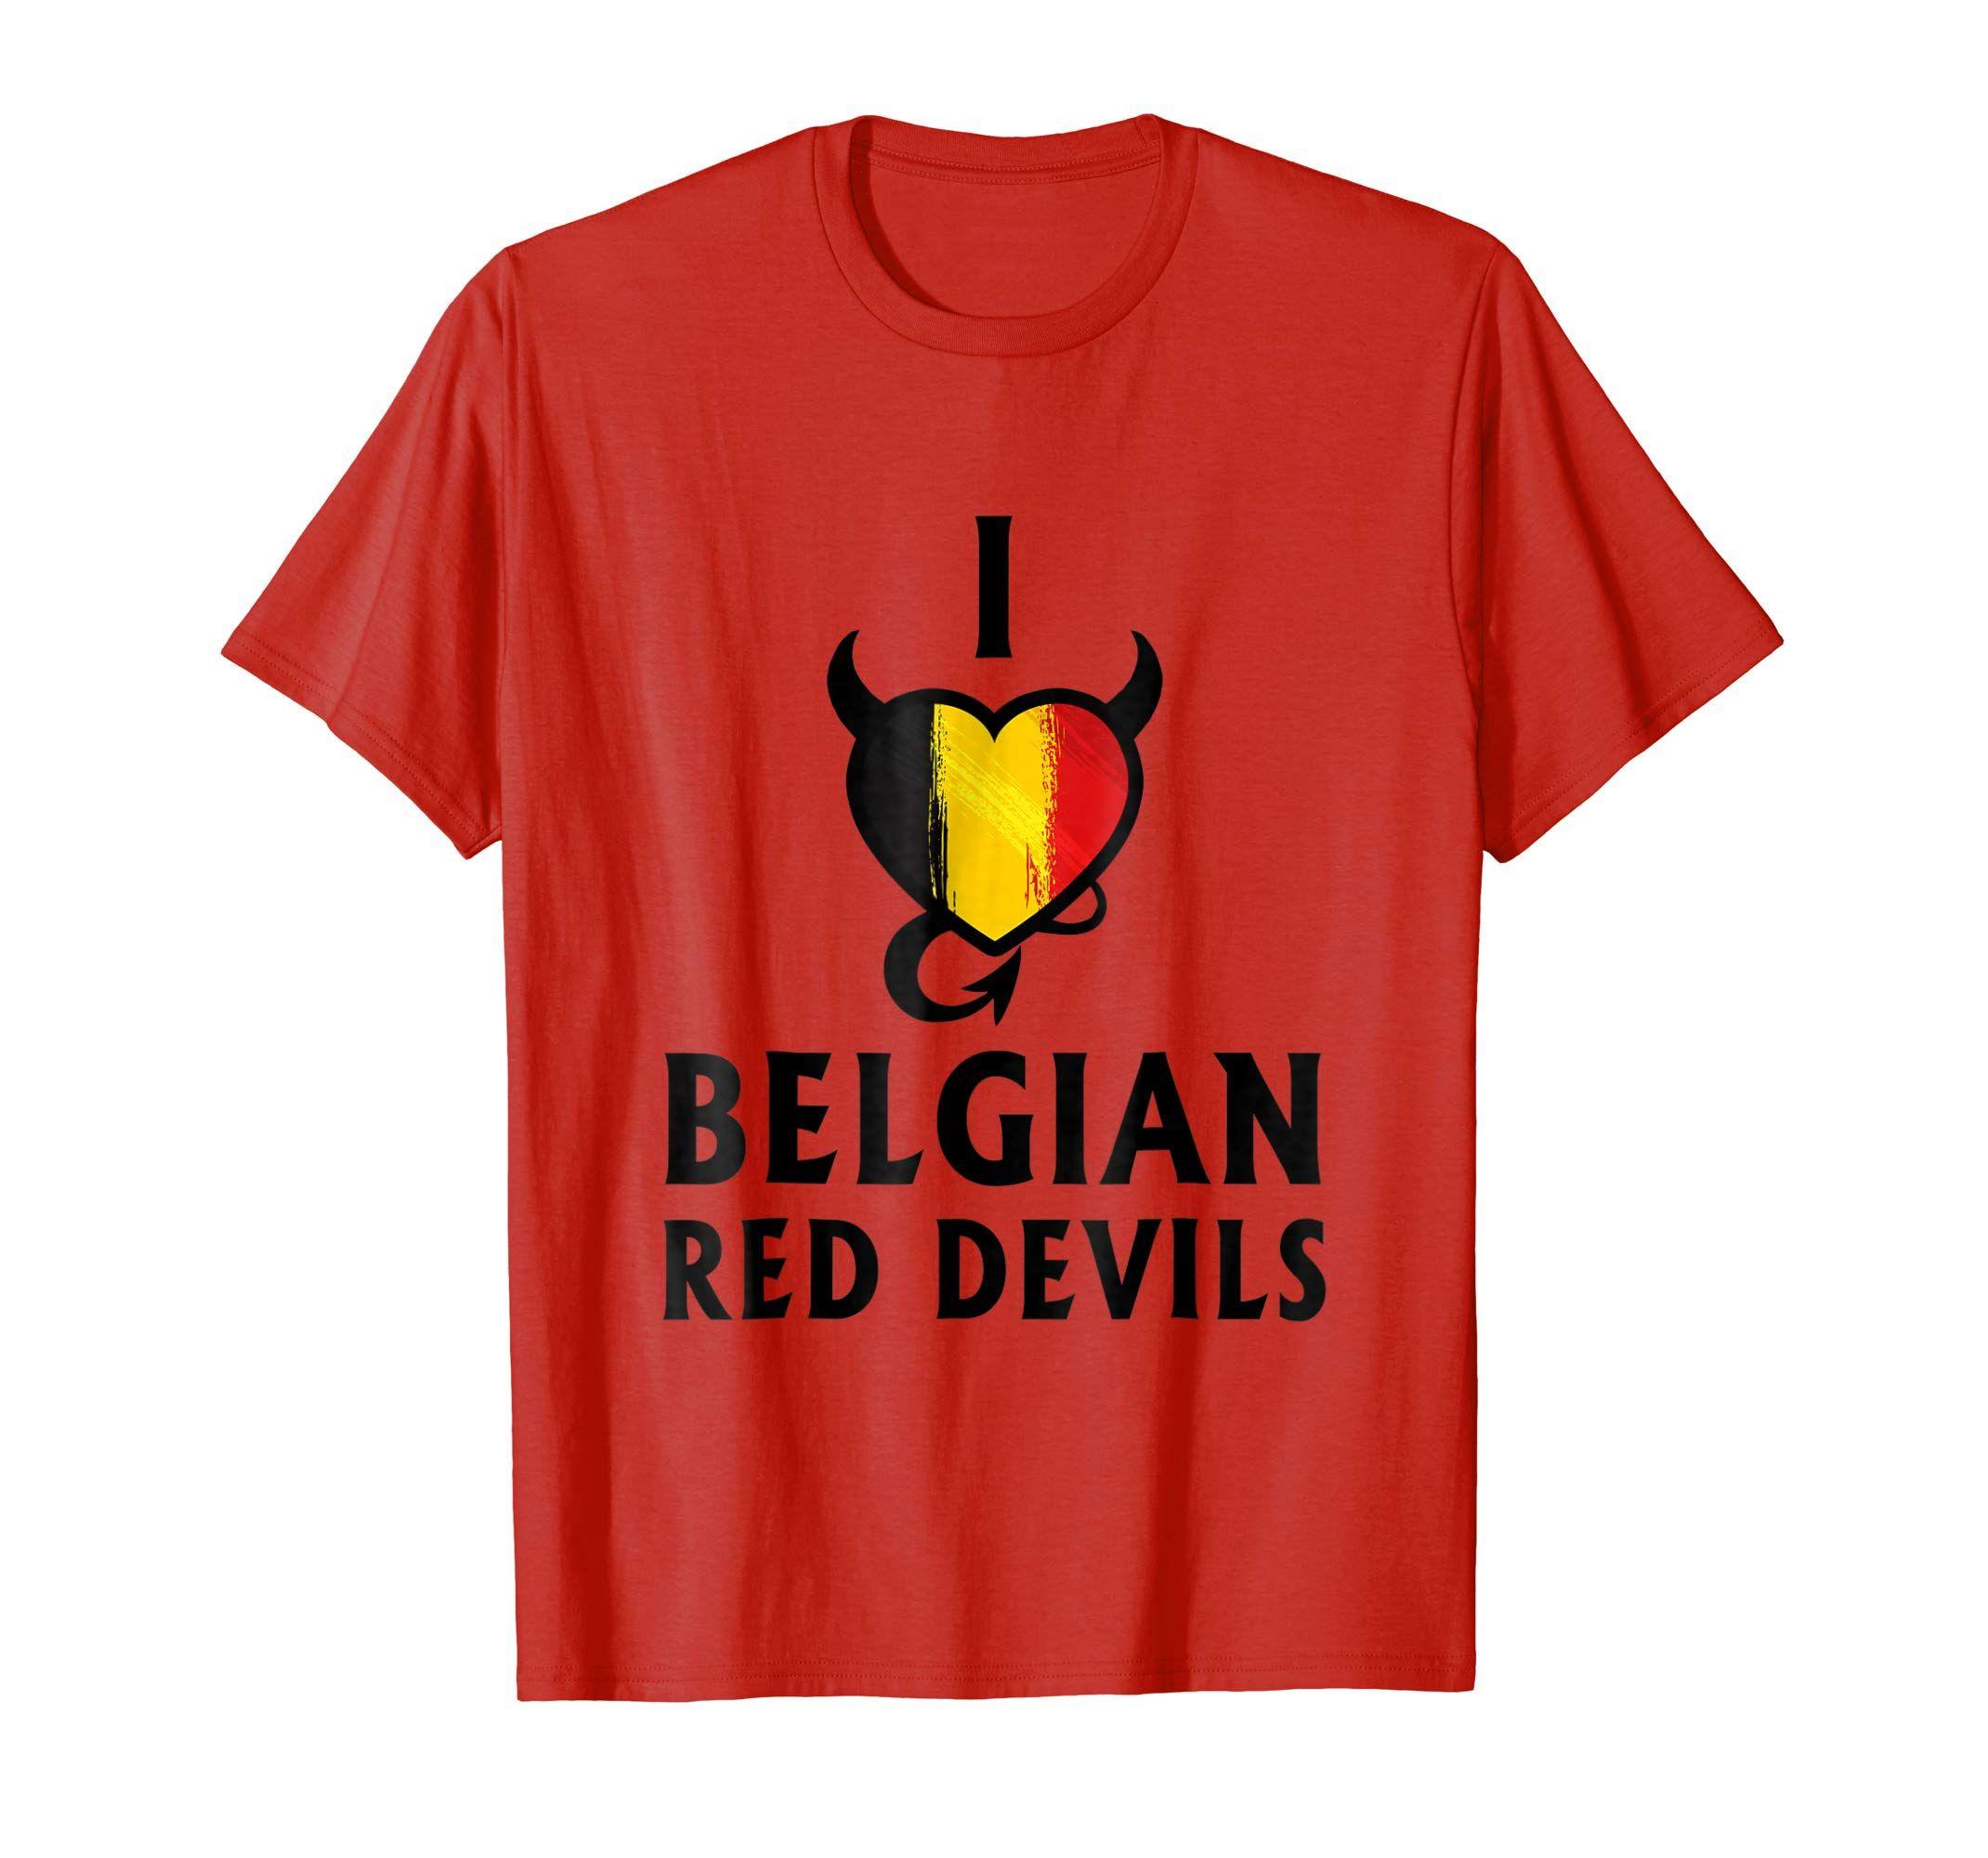 Red Devils Soccer Logo - i love Belgian red devils soccer 2018: Clothing